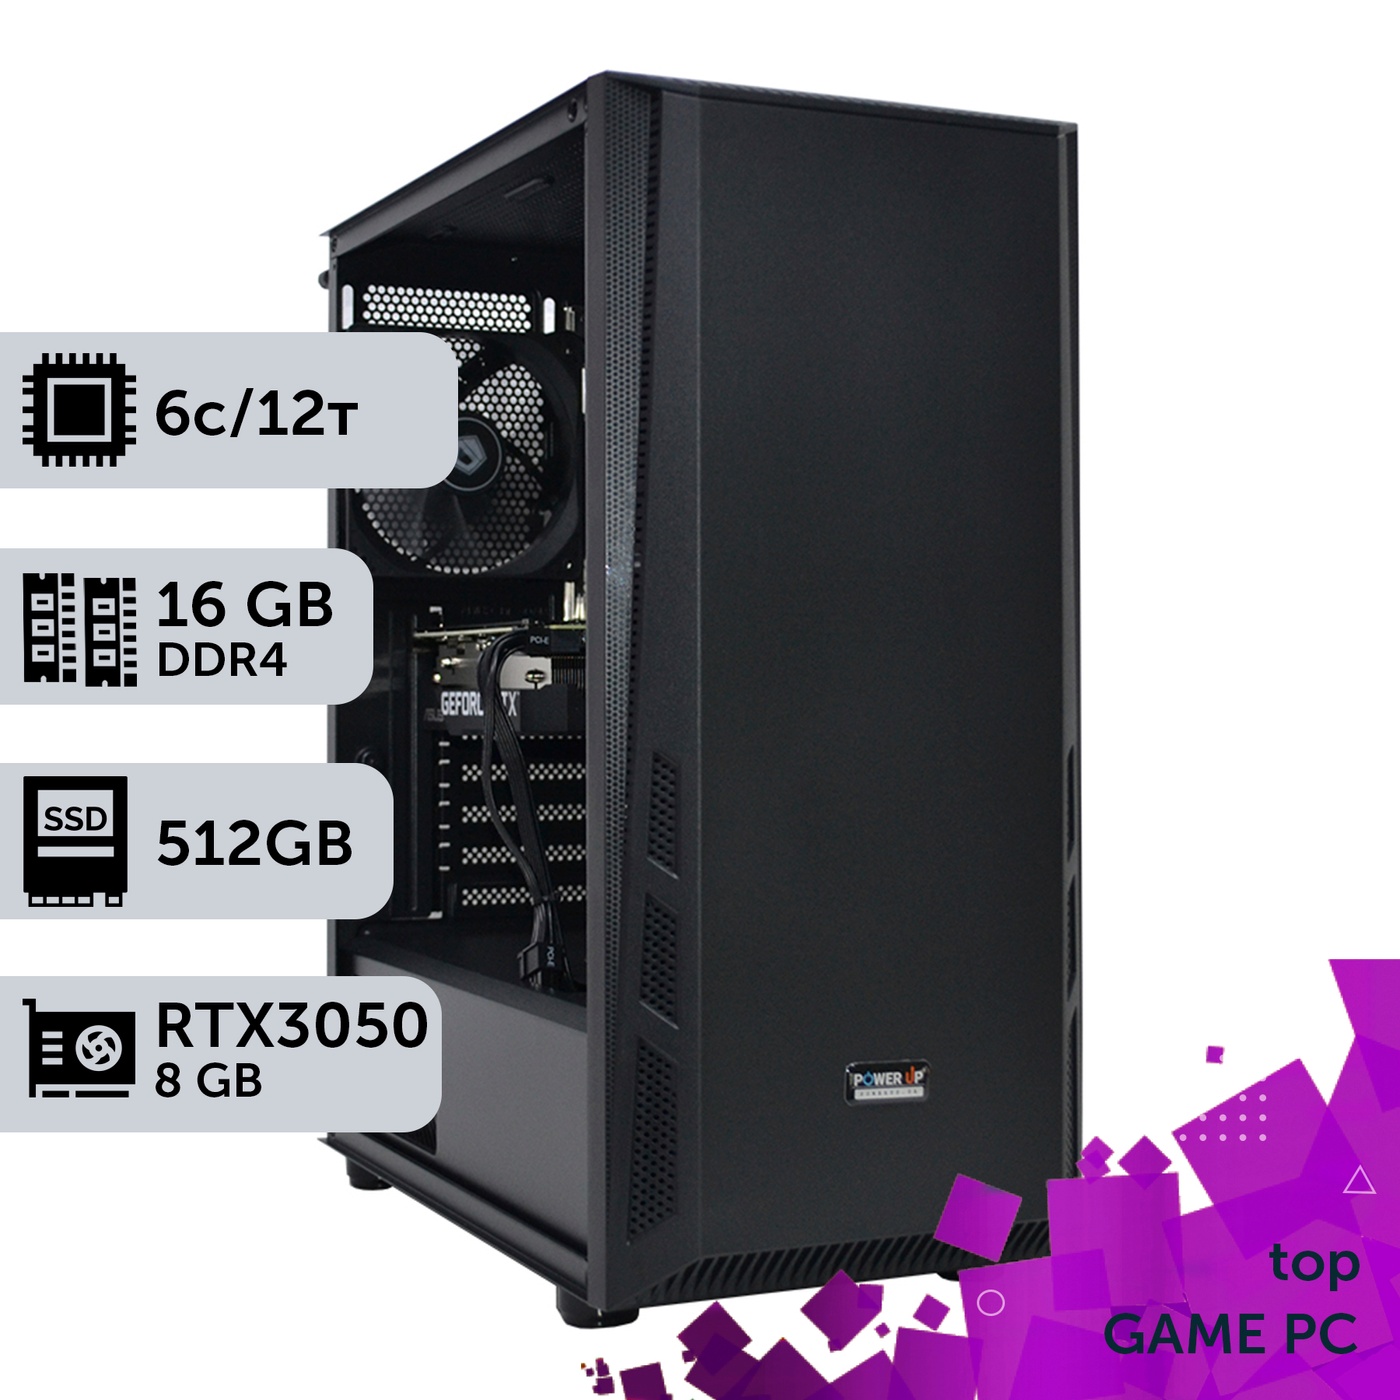 Игровой компьютер GamePC TOP #273 Ryzen 5 5600/16 GB/SSD 512GB/GeForce RTX 3050 8GB